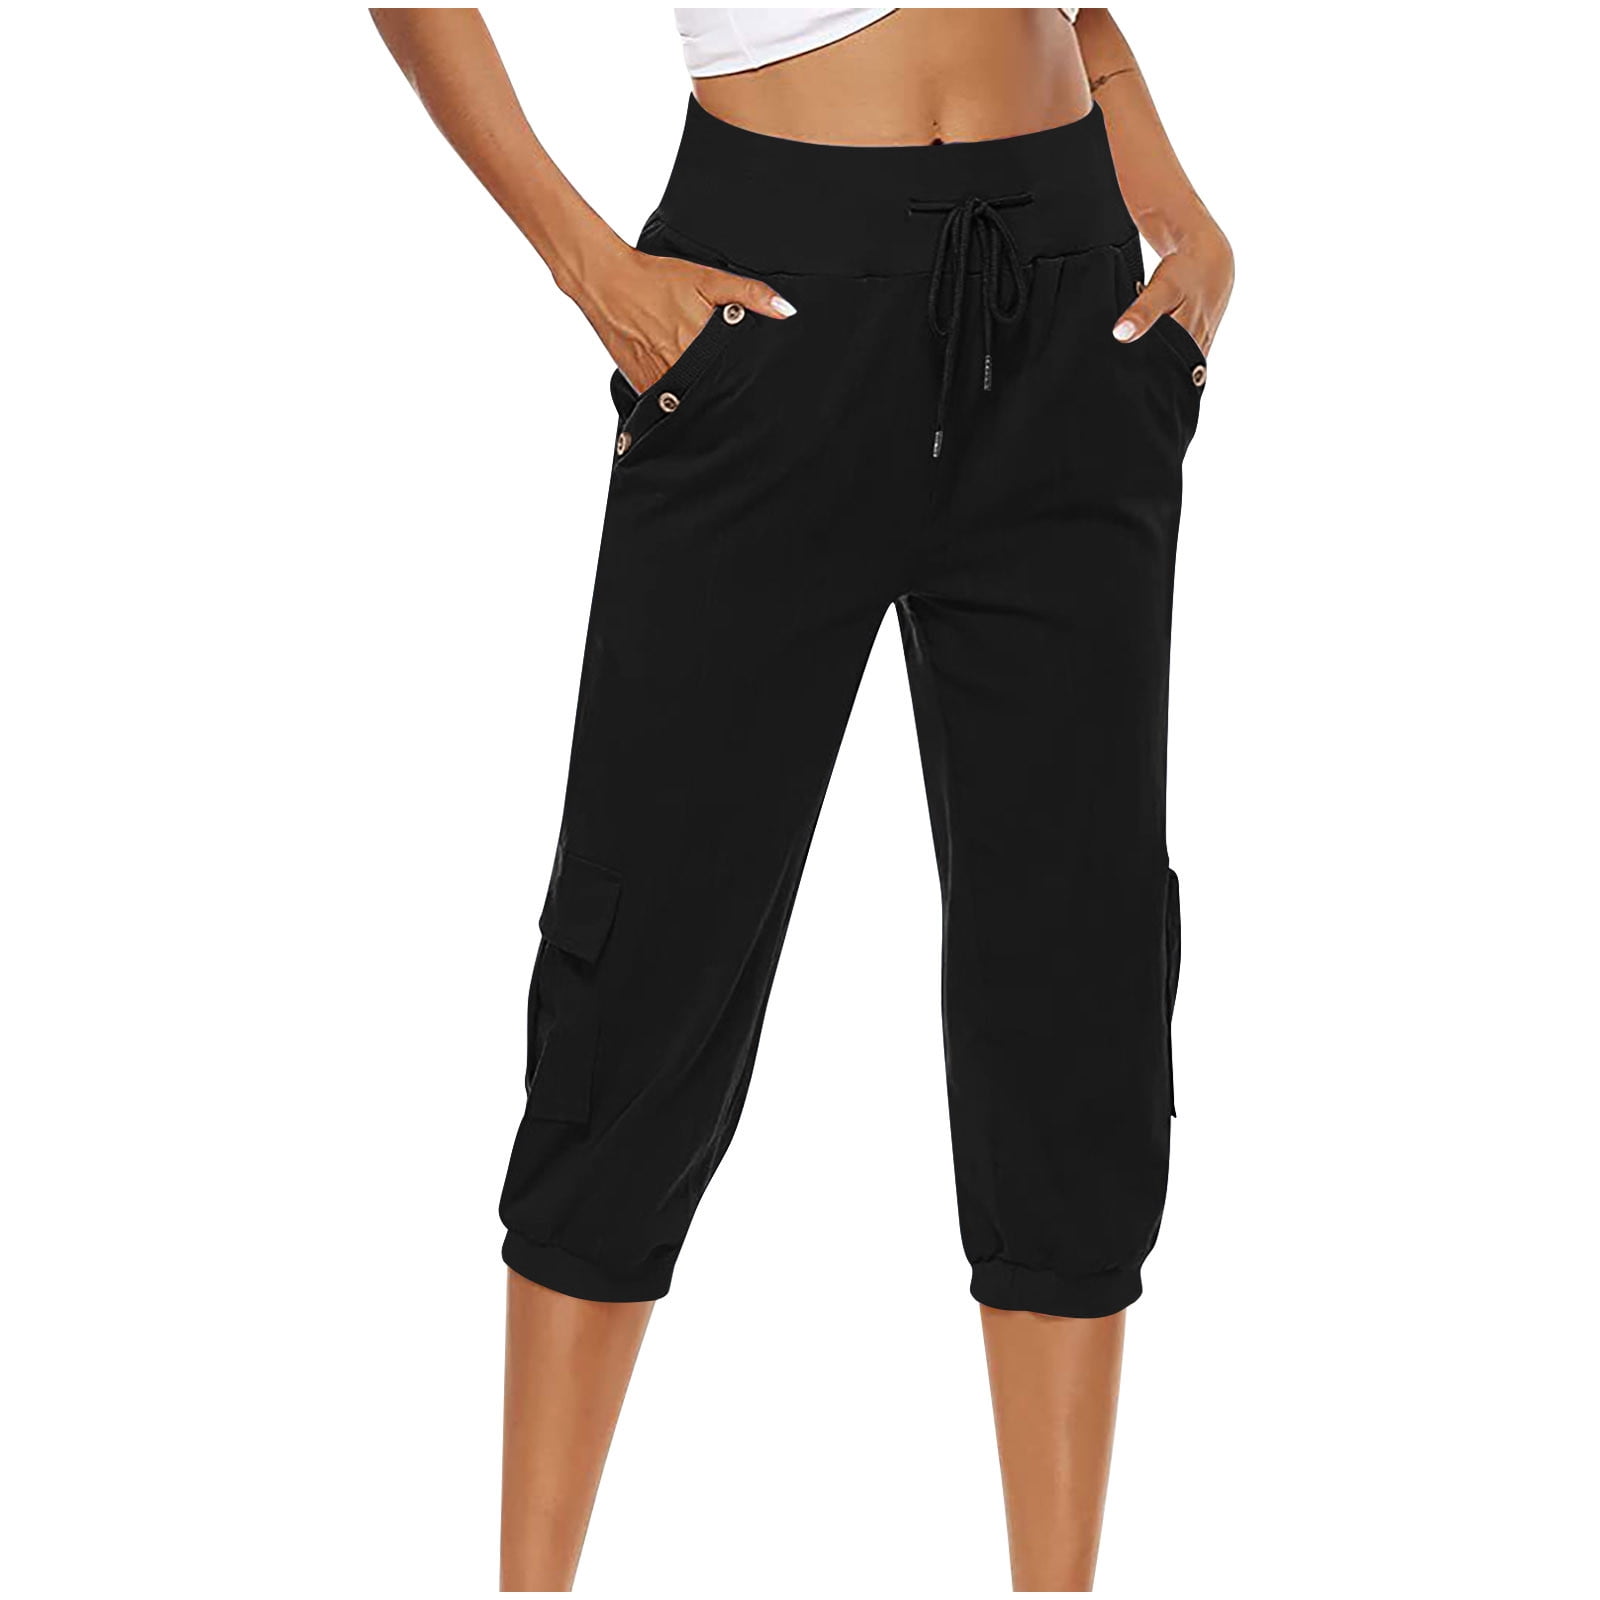 JWZUY Women's Plus Size Drawstring Cargo Capri Pant Lightweight Cotton  Linen Cropped Jogger Pants Summer Pants with Pocket 1-Gray Medium 